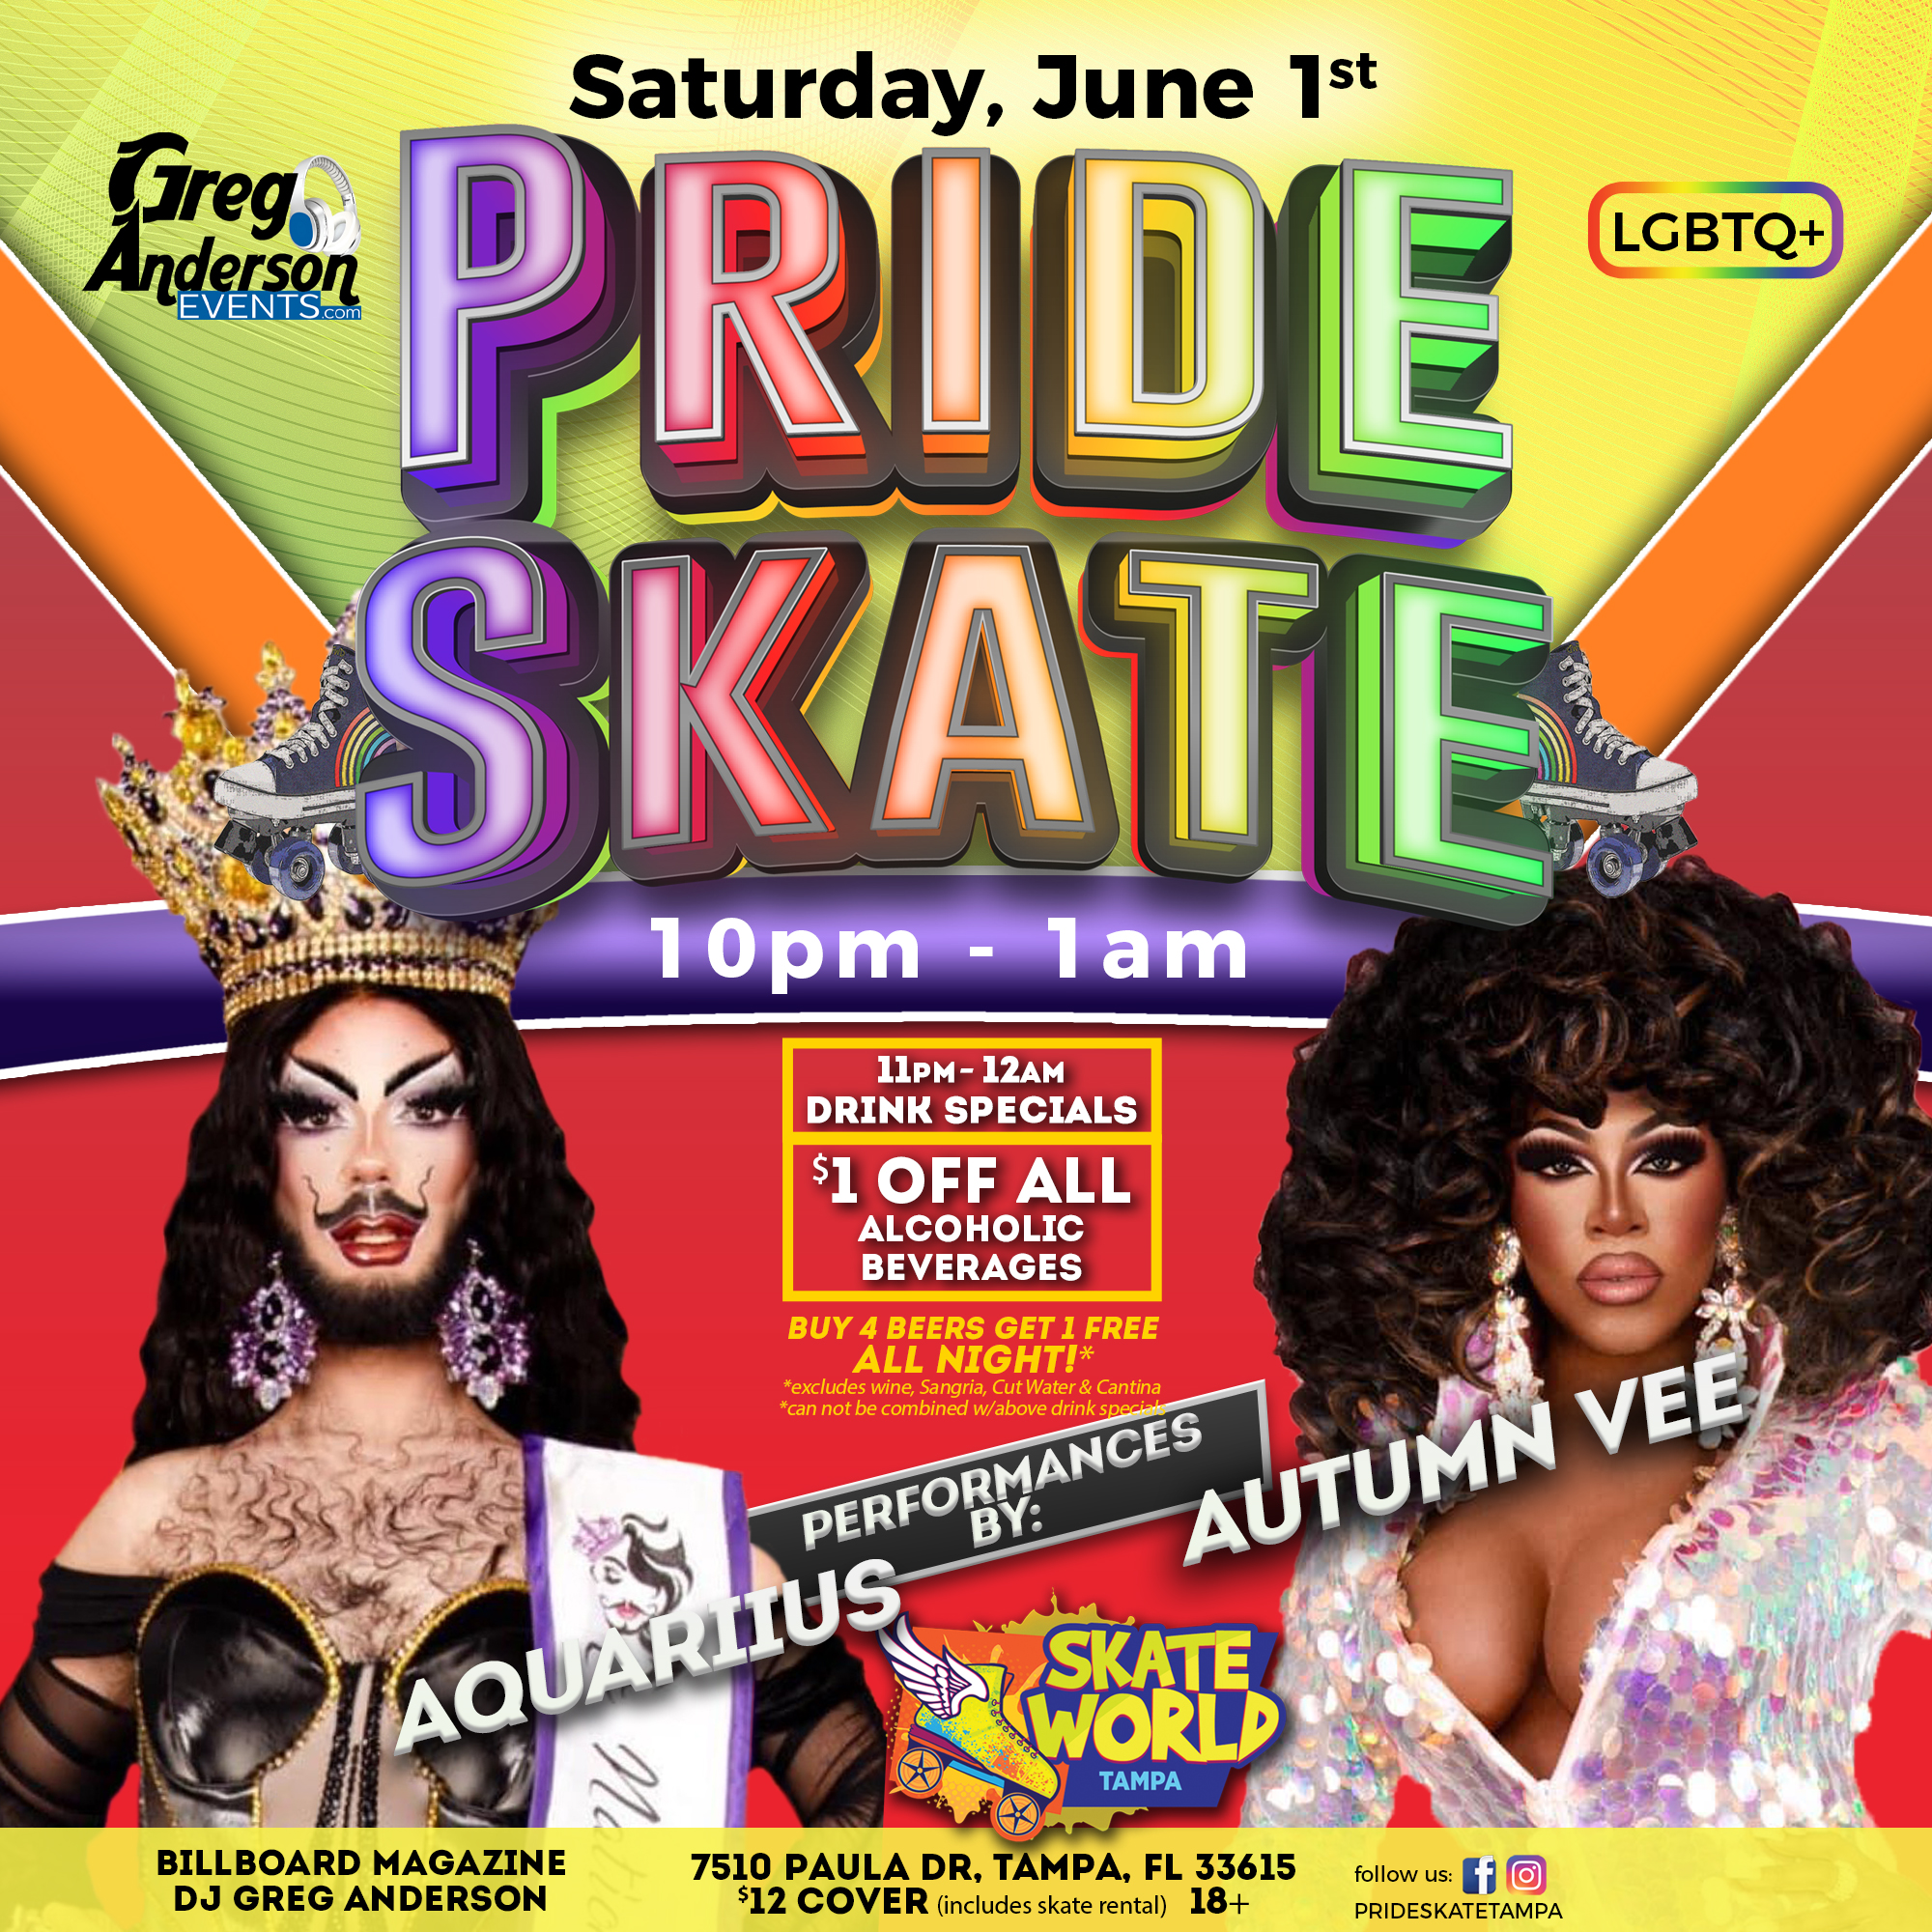 LGBTQ+ Pride Skate Adult Night at Skateworld Tampa